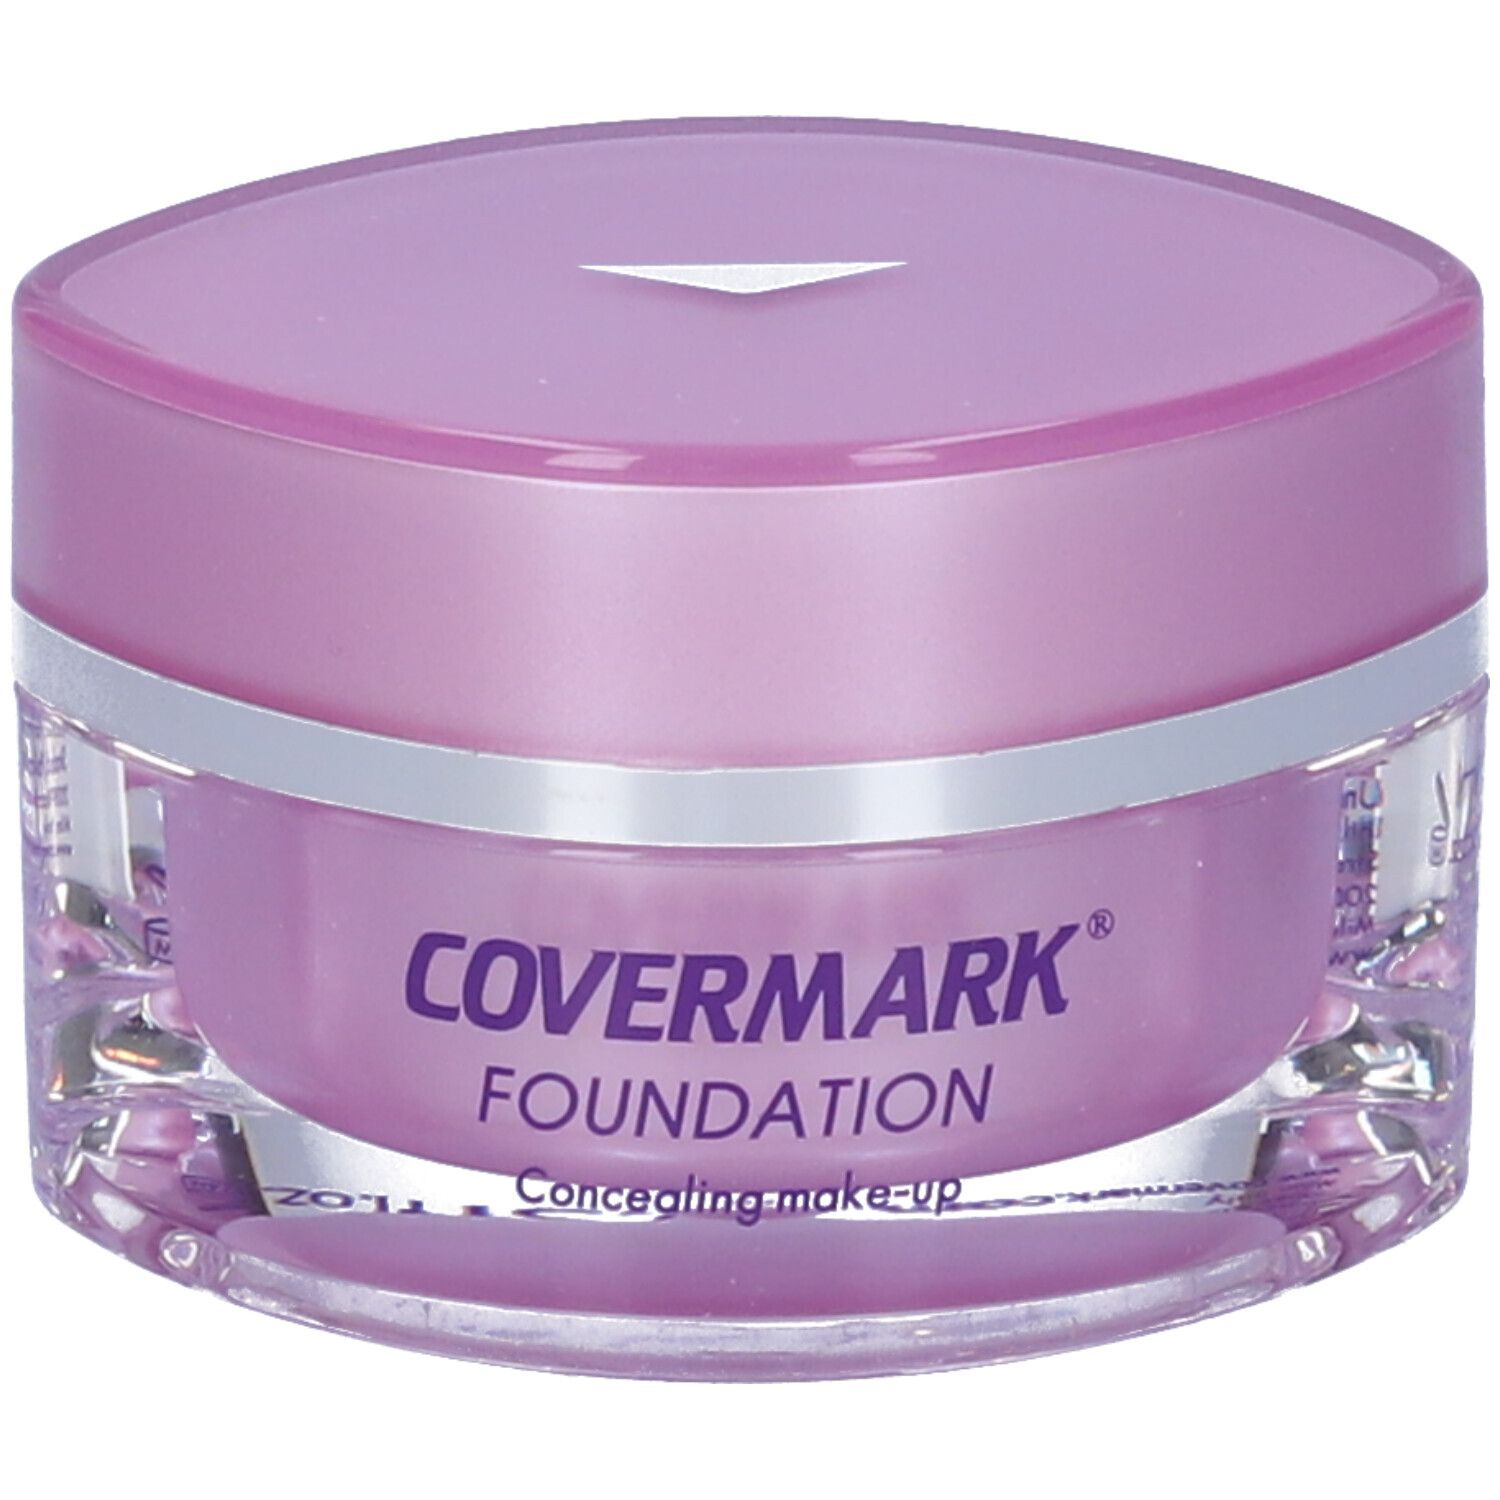 Covermark Foundation 10 15Ml